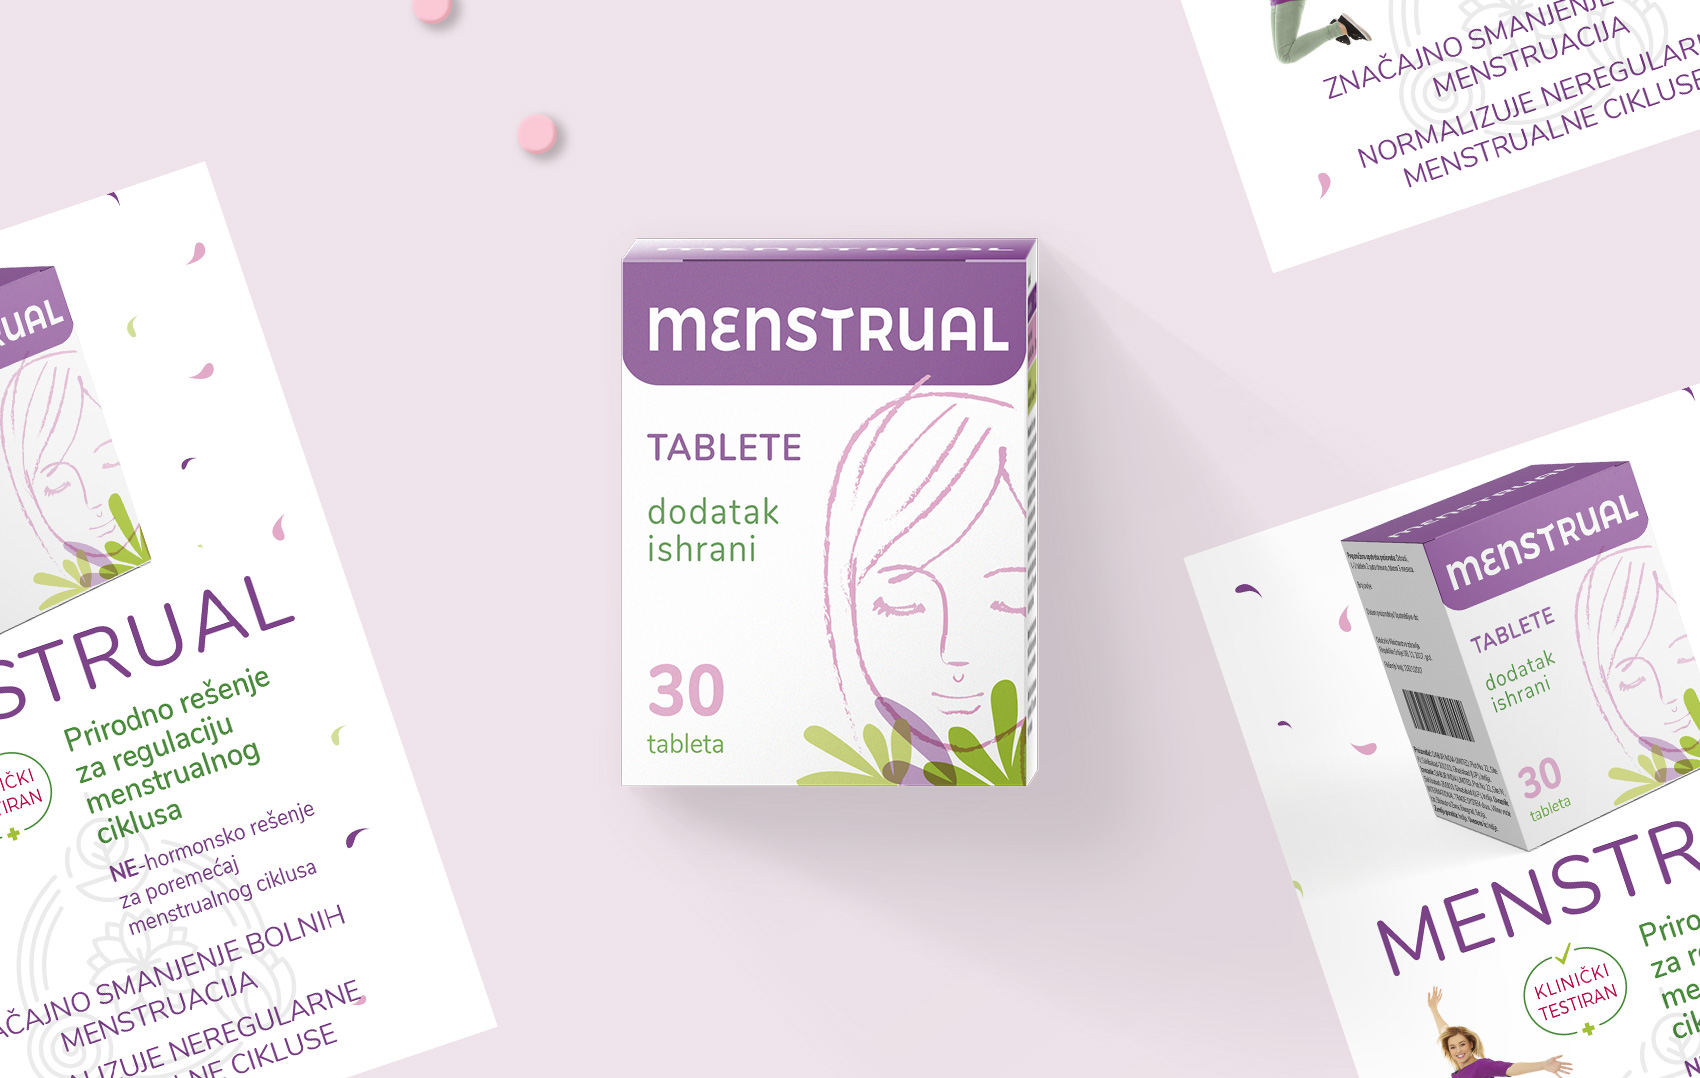 Menstrual design